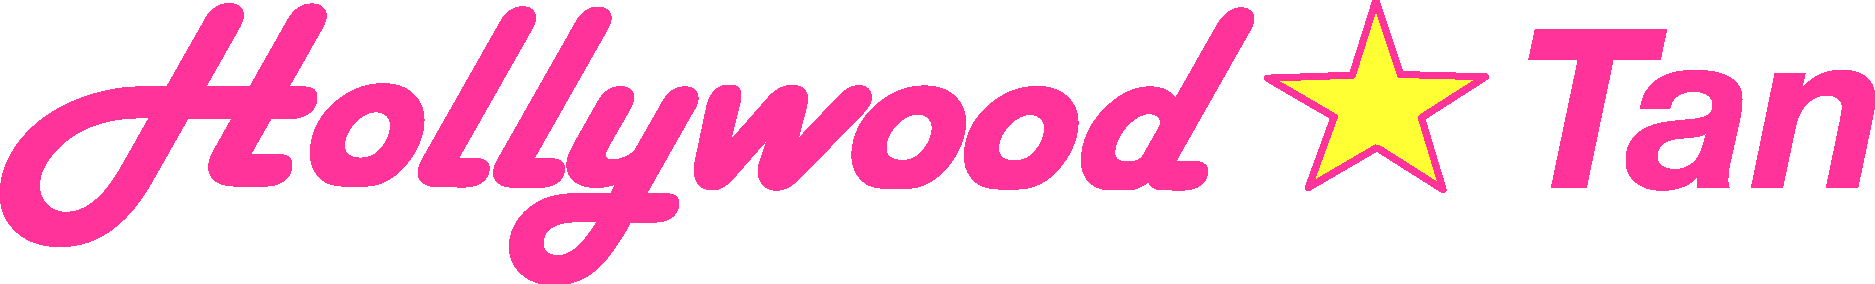 Hollywood Tan Logo Vector